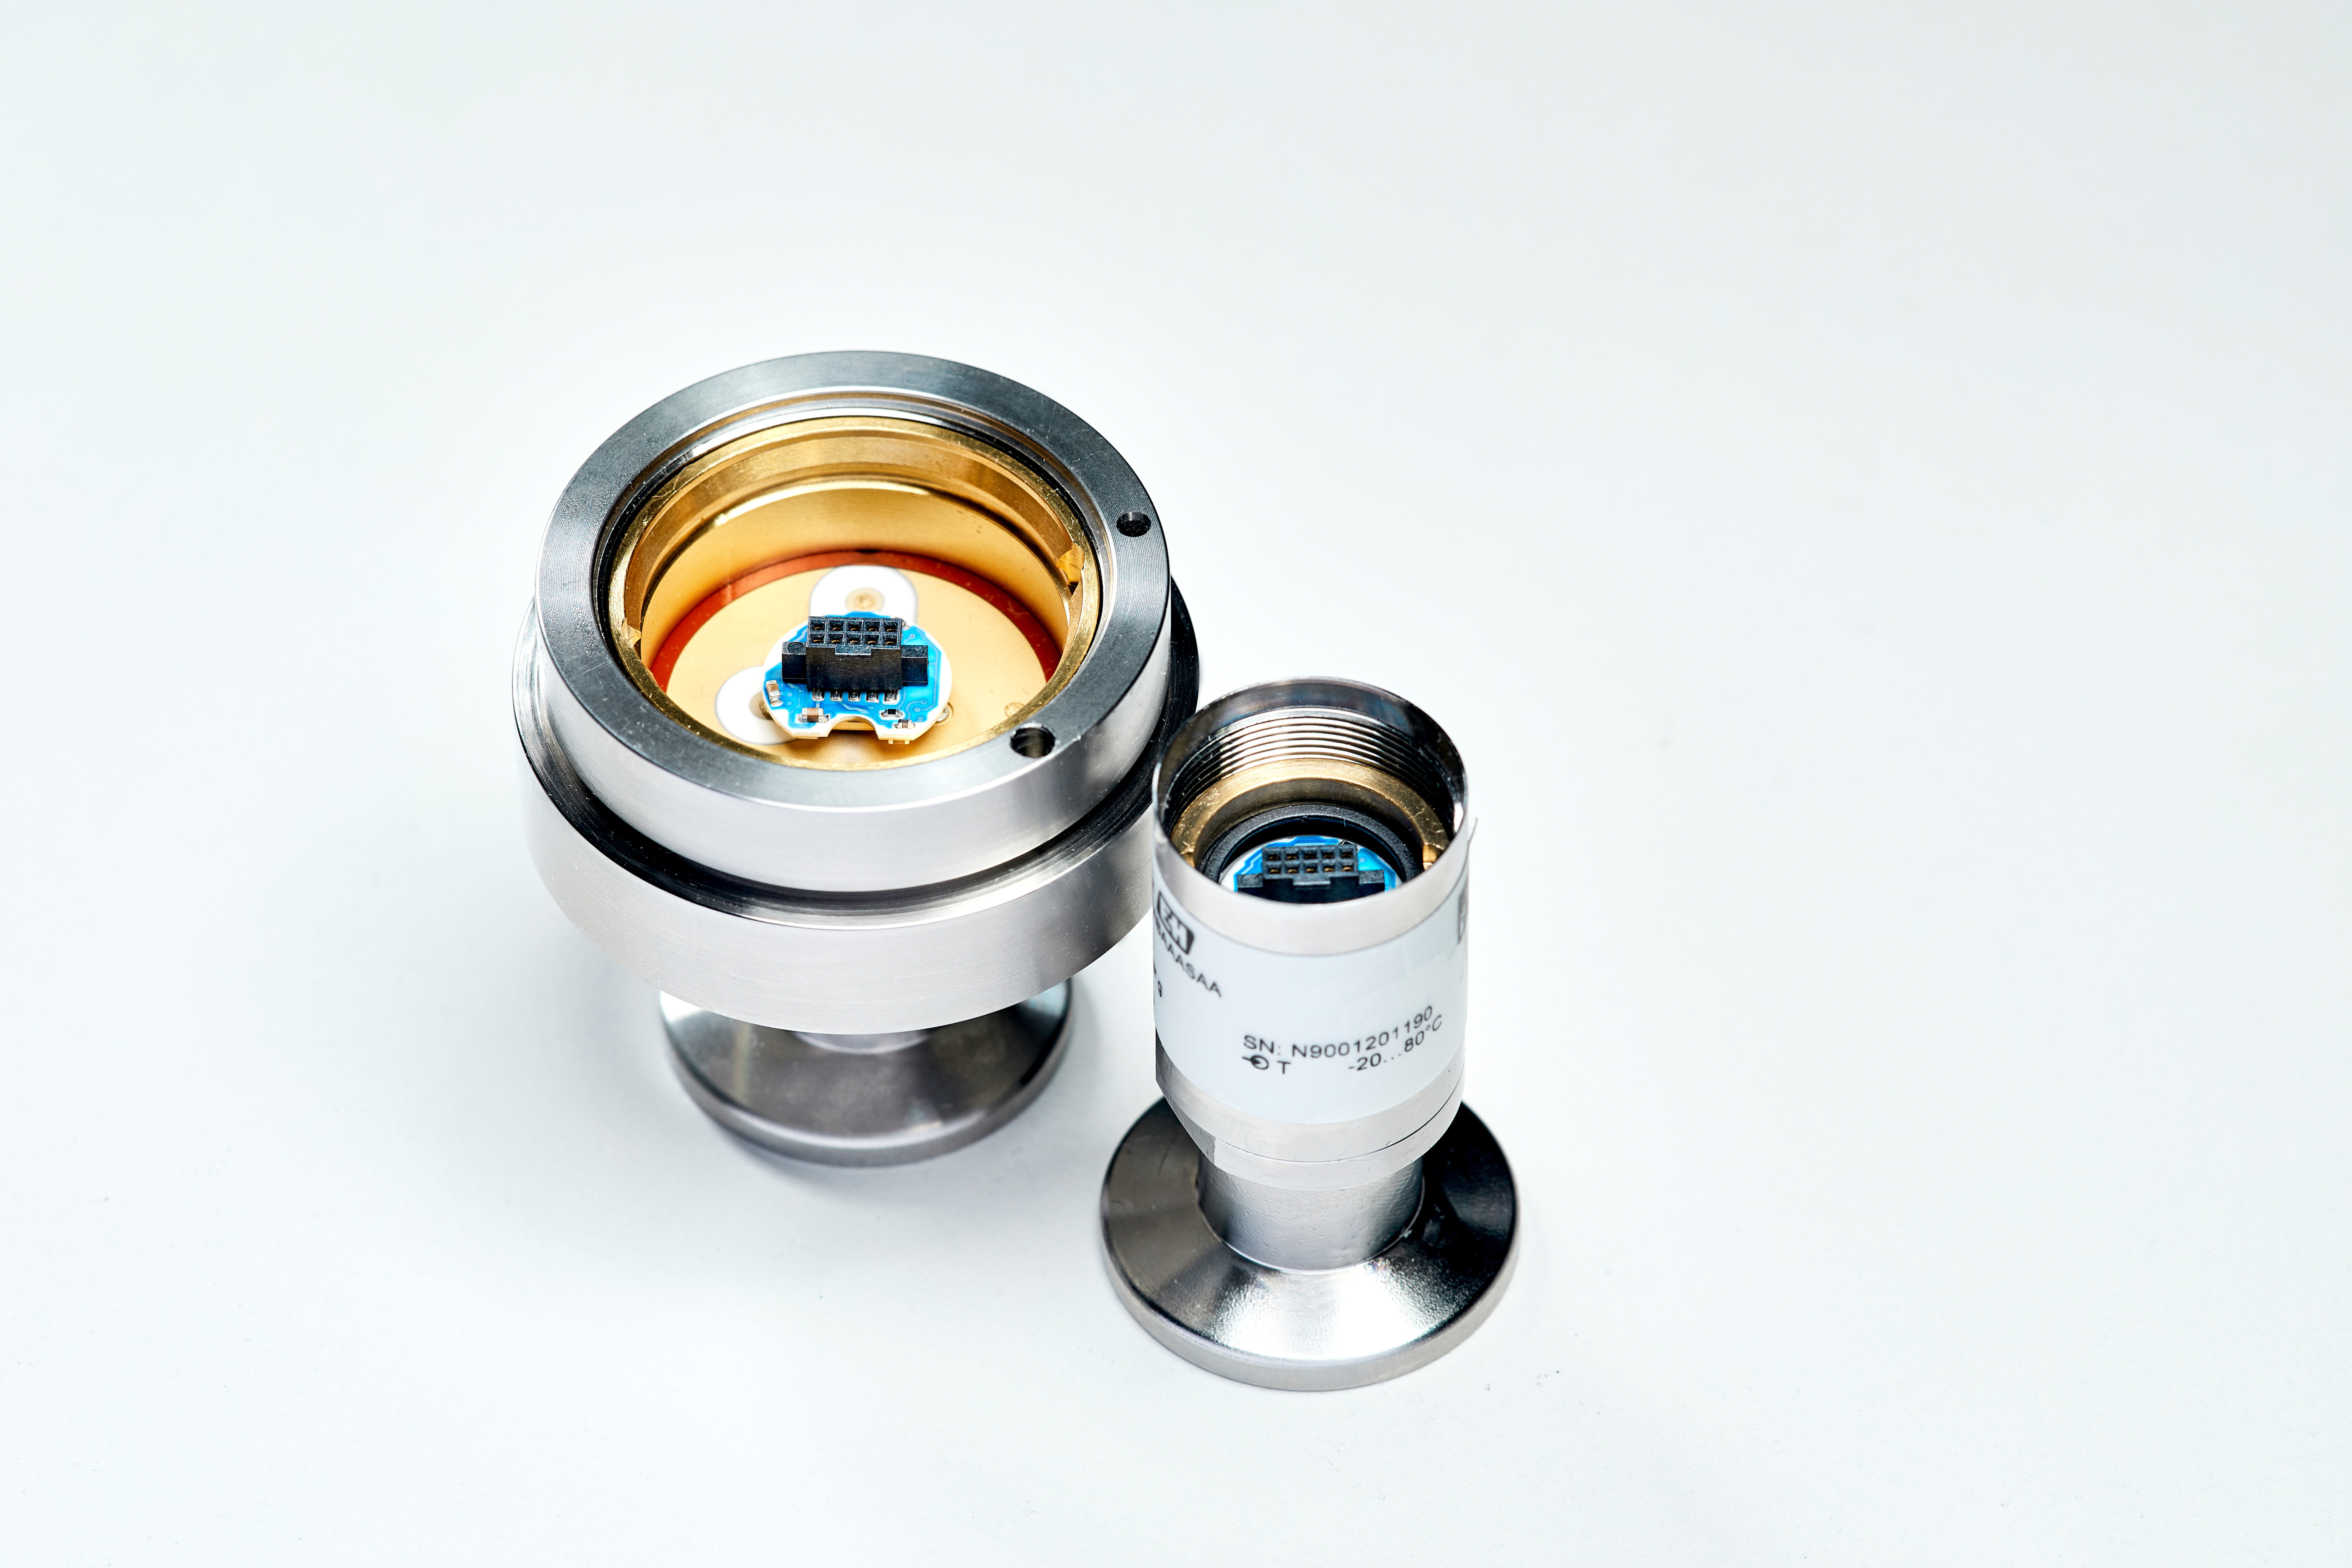 Advantages of Capacitive Ceramic Pressure Sensors in Vacuum Technology